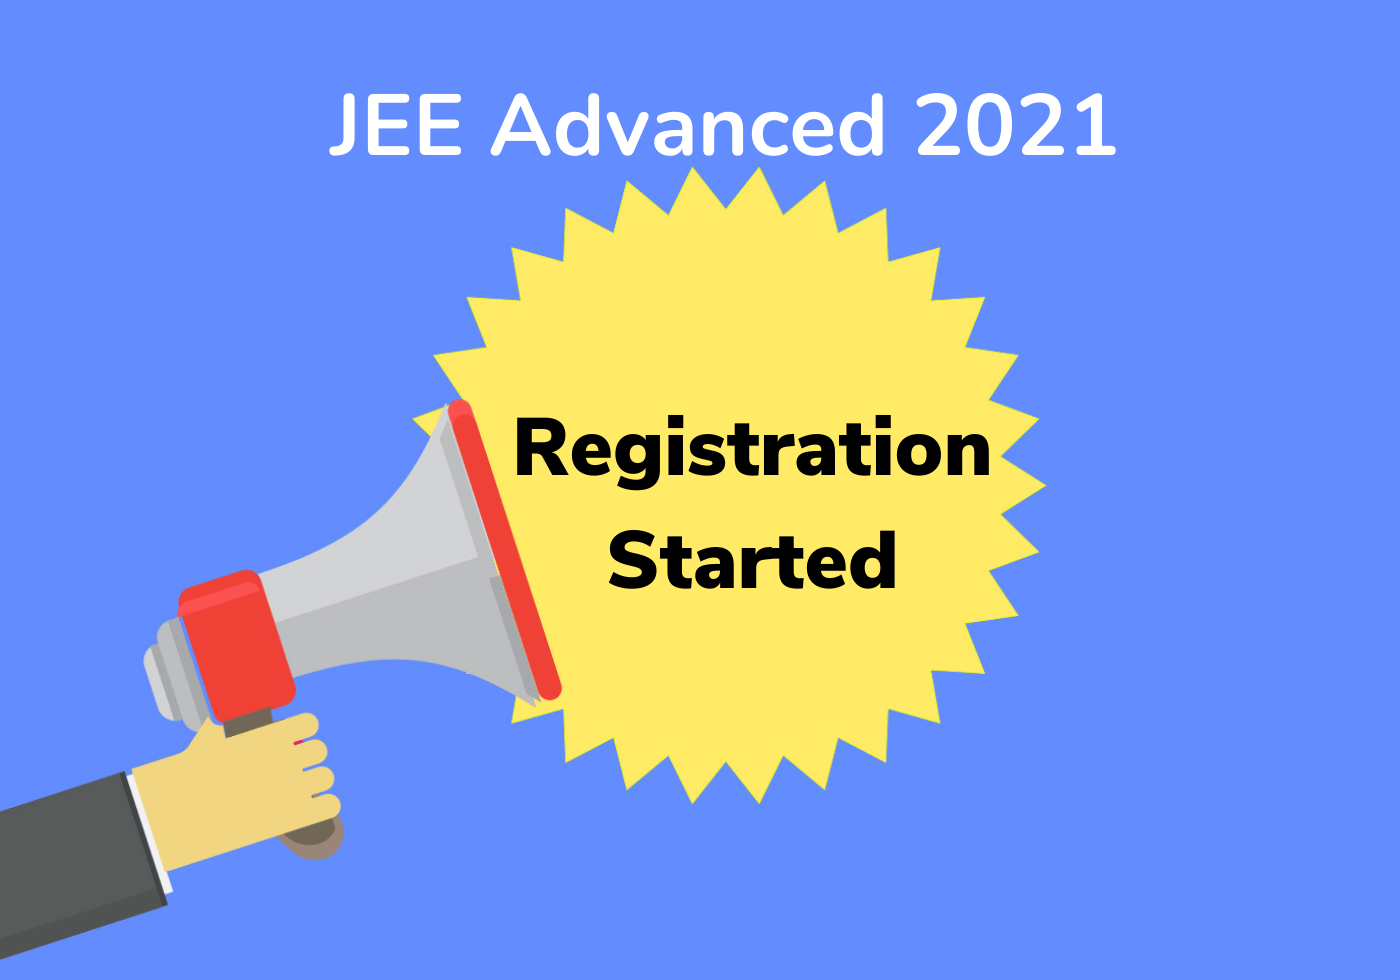 JEE Advanced registration